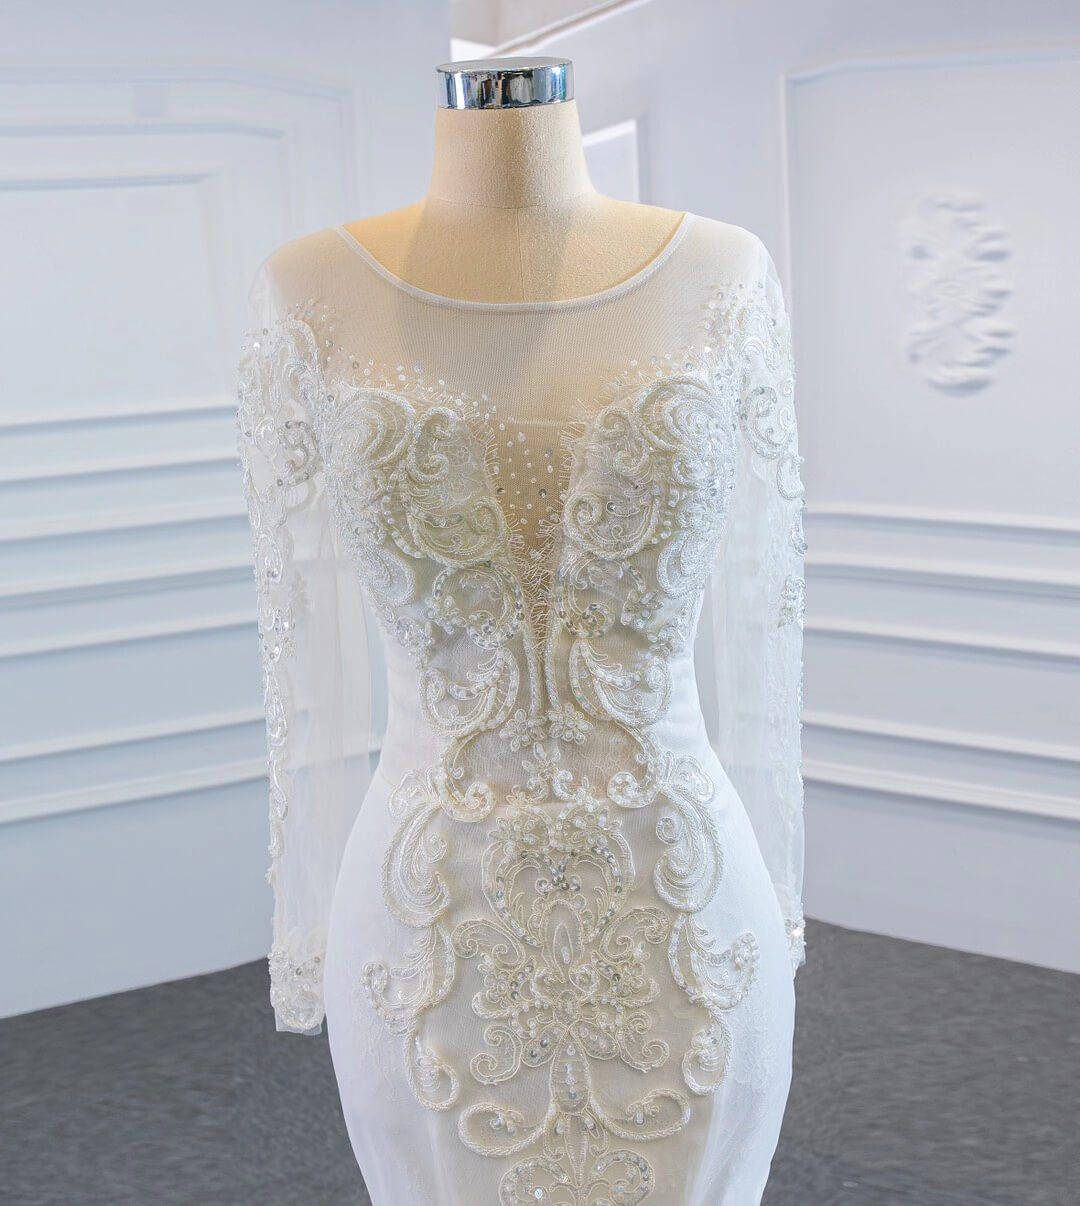 Long Sleeve Mermaid Lace Wedding Dresses Detachable Train VW1019-wedding dresses-Viniodress-Viniodress